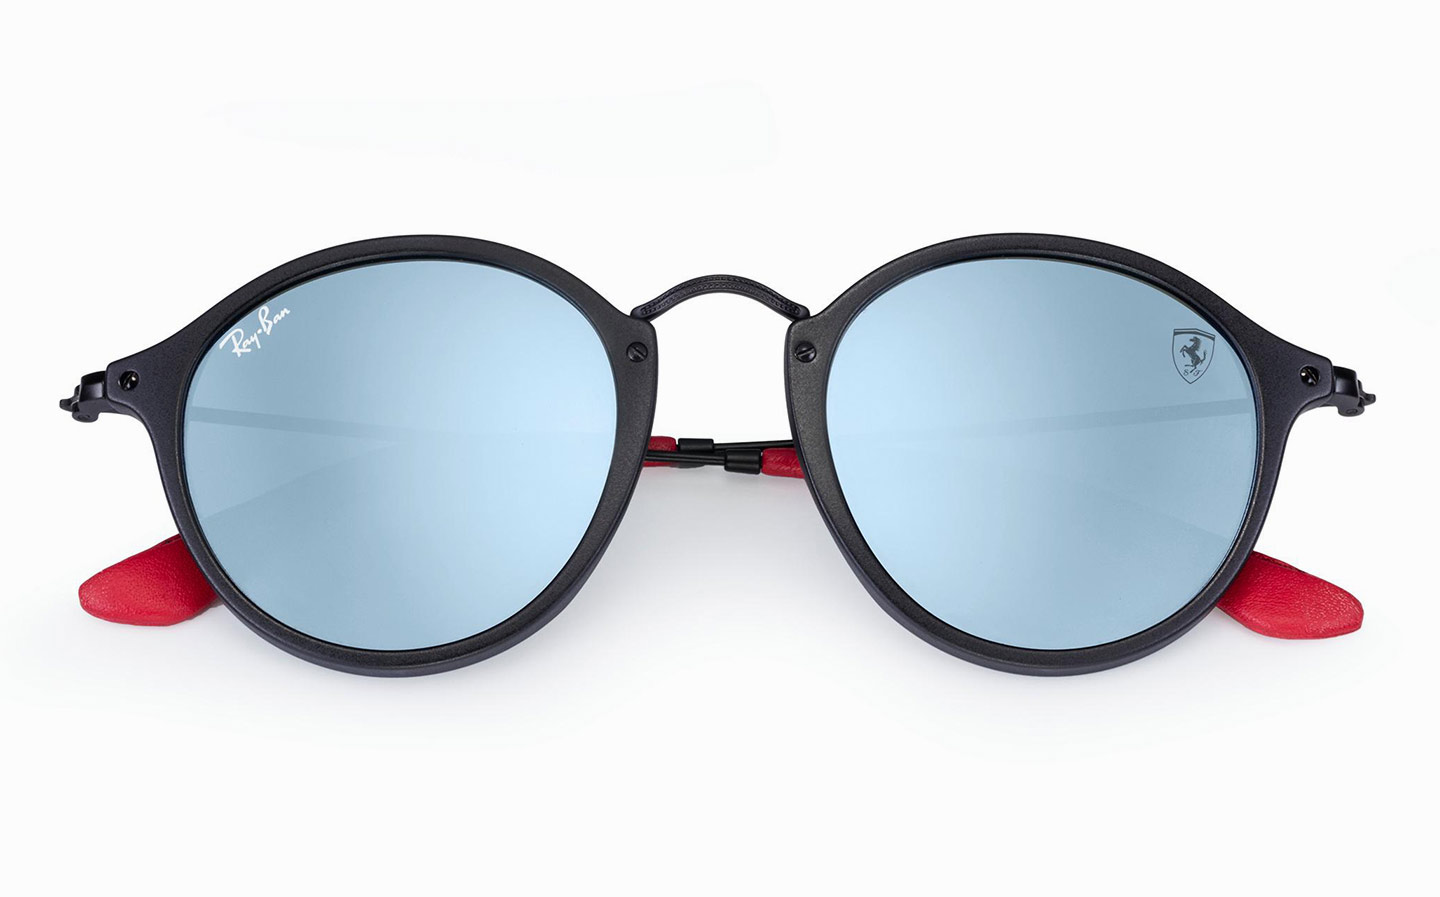 Ray Ban Ferrari Sunglasses